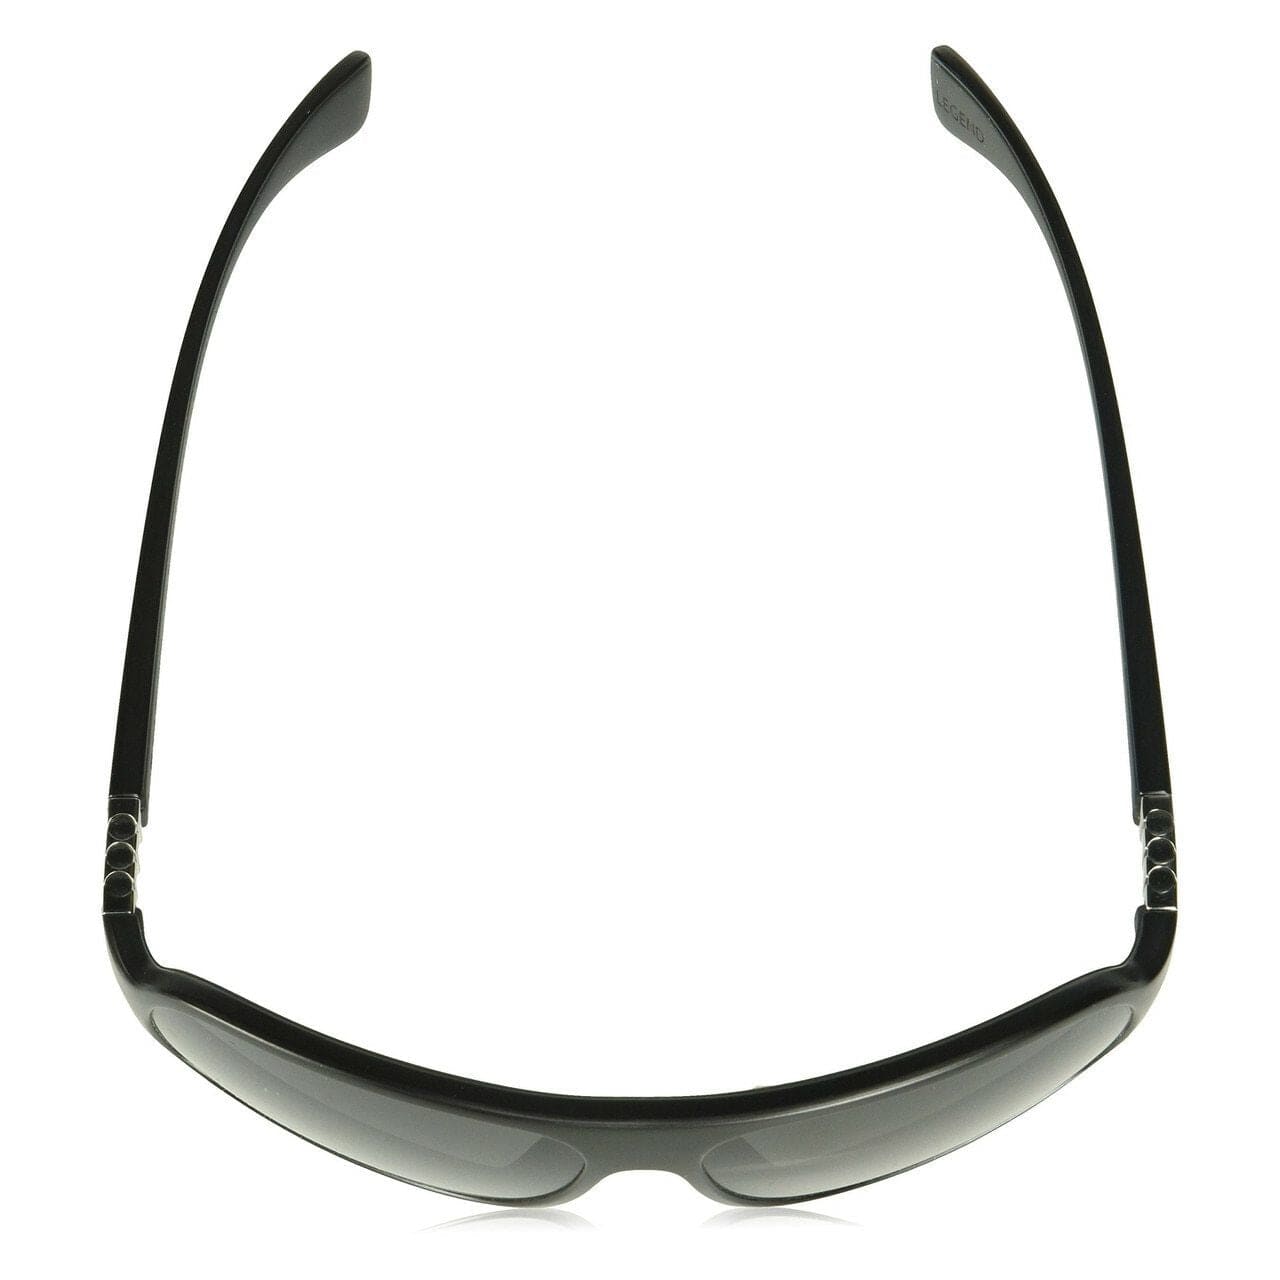 TAG Heuer 9301 101 Legend Grey Lenses with Black Oval Men's Sunglasses Frames 669301101641403